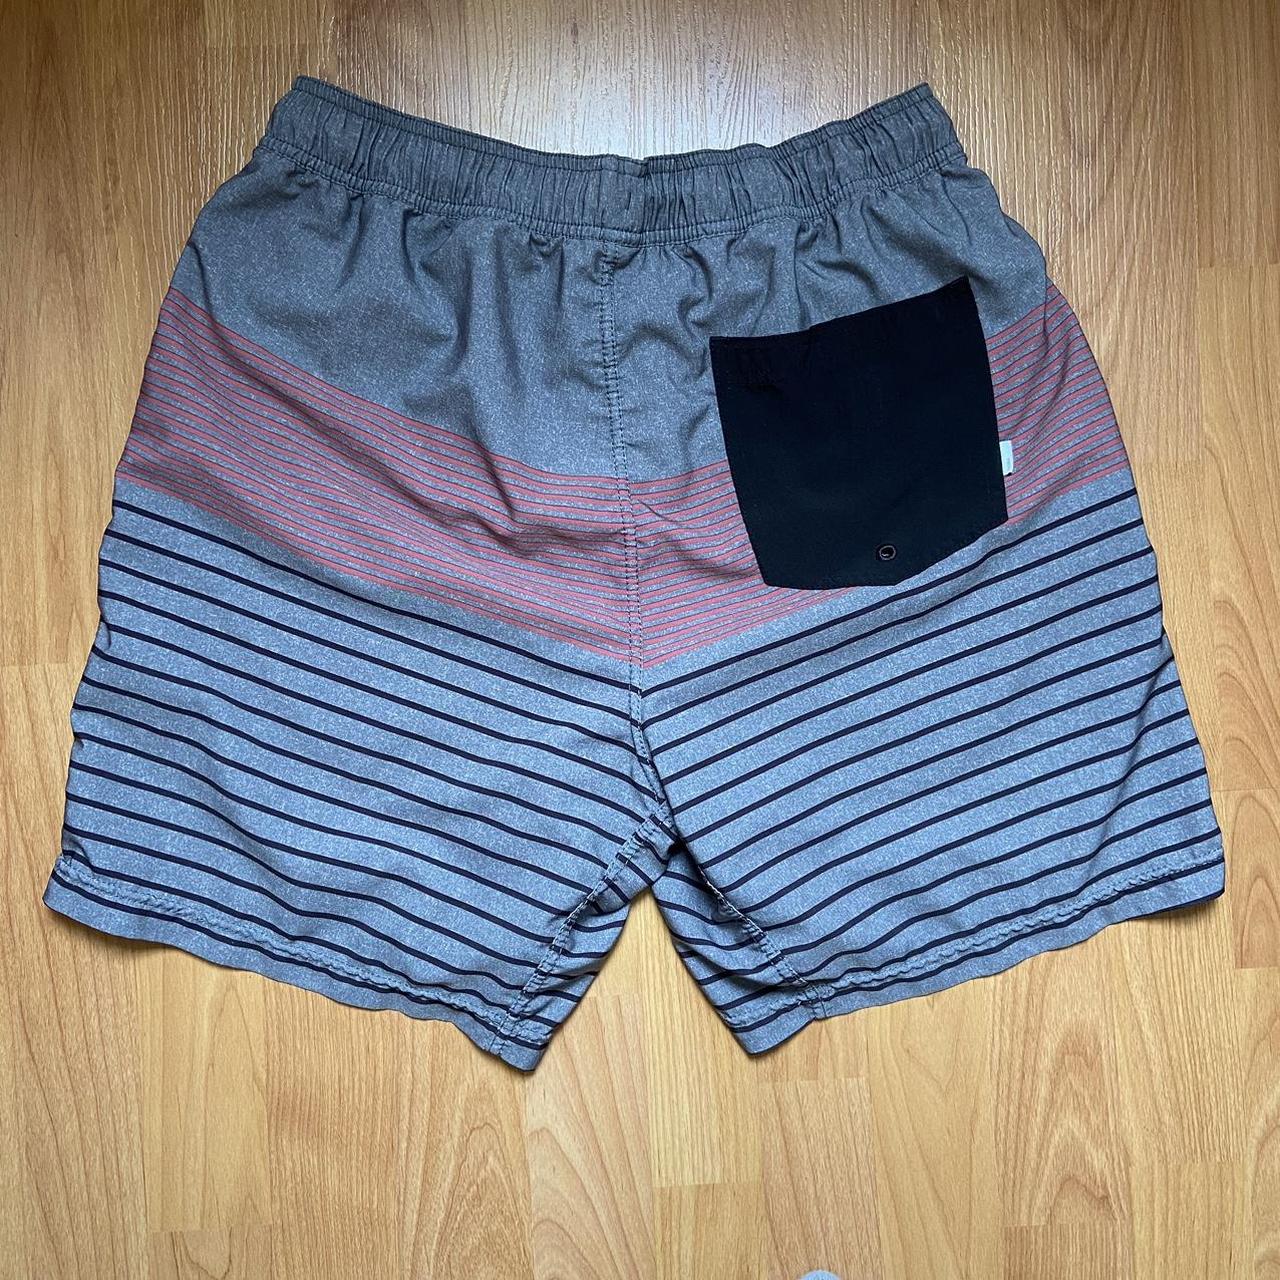 Vuori Men's Grey and Red Shorts | Depop